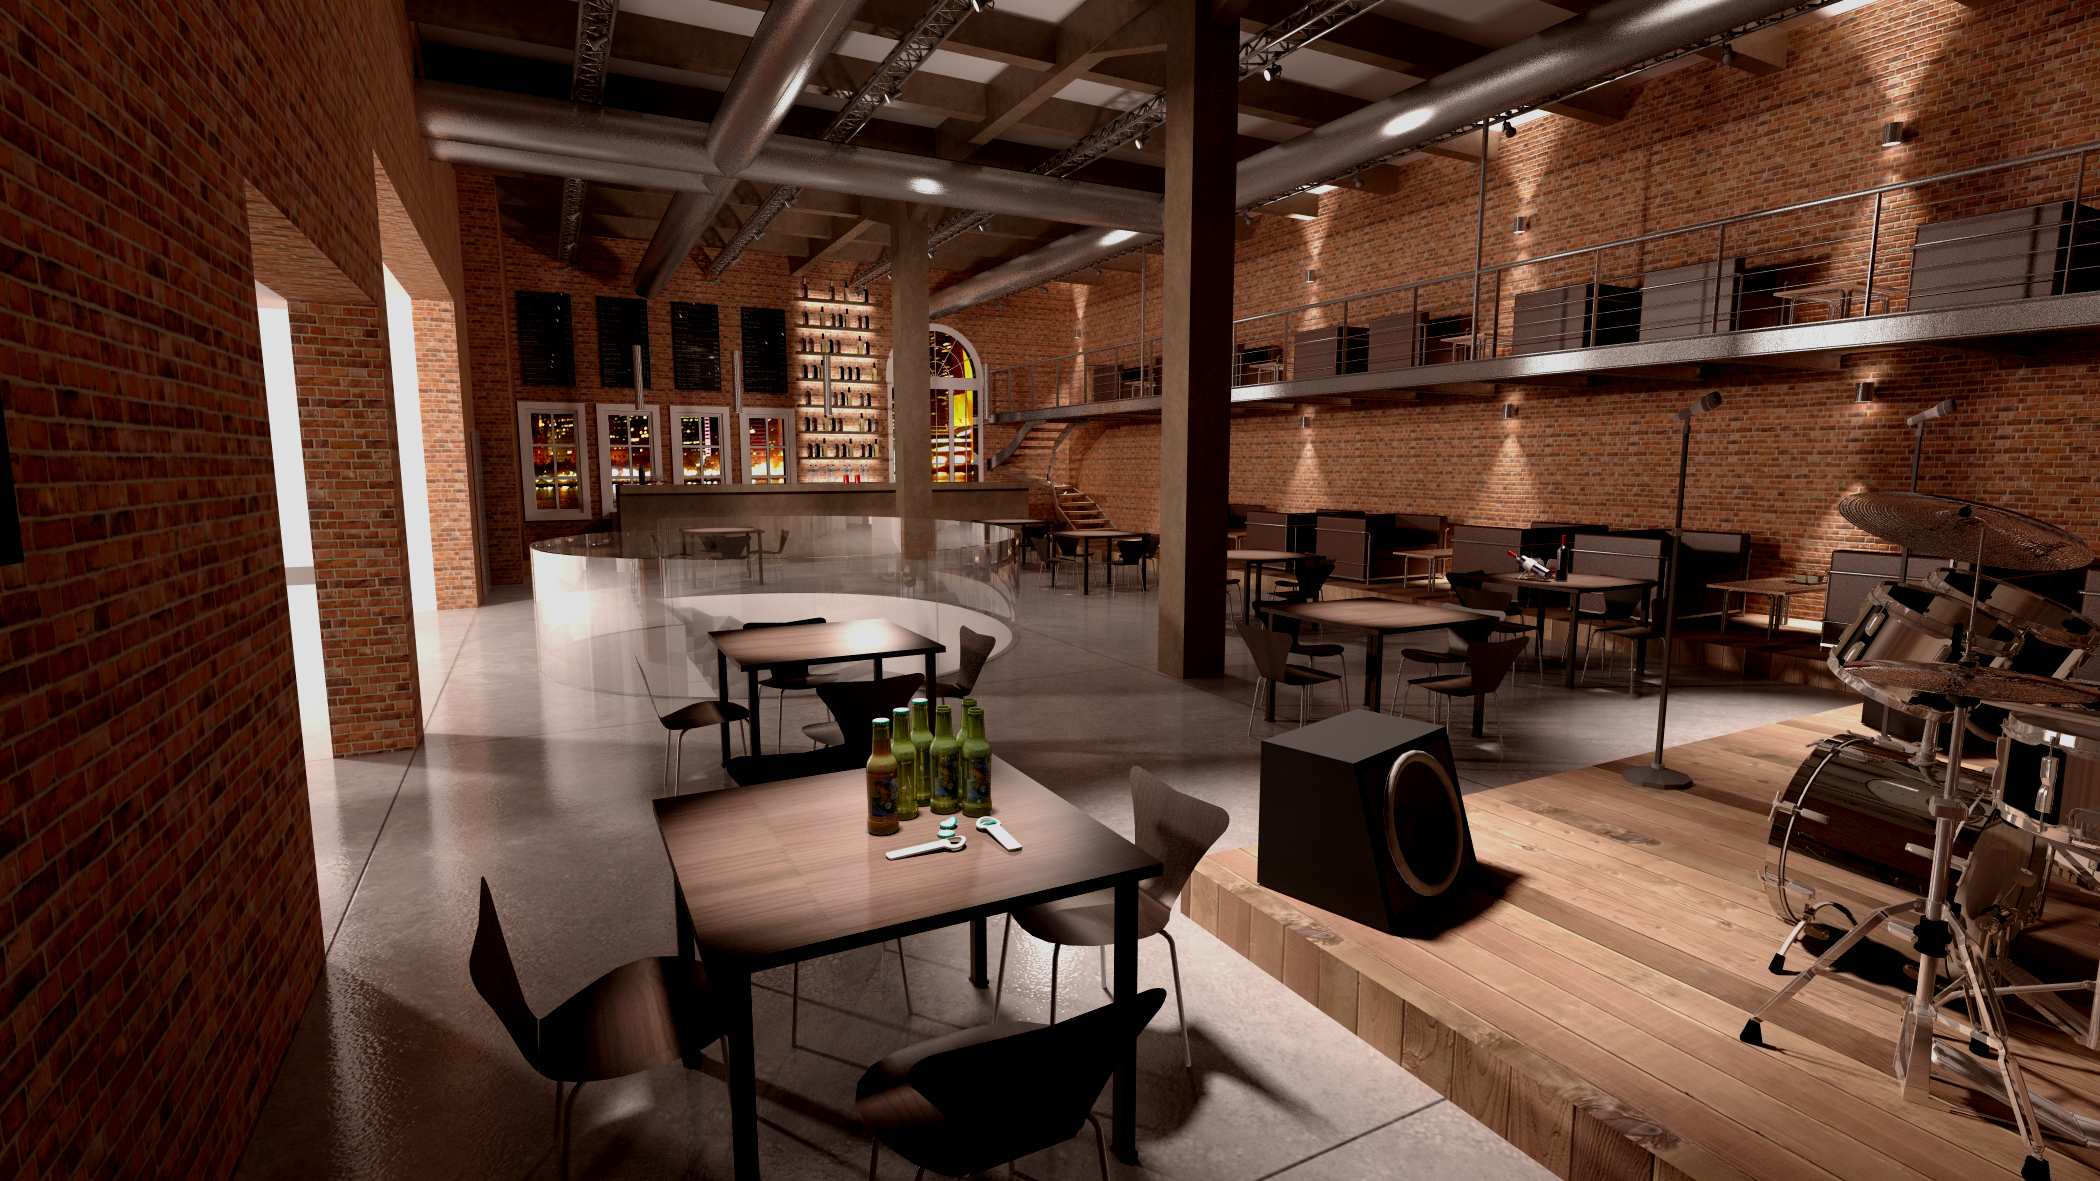 Étterem belsőépítészeti koncepció / Restaurant interior design concept